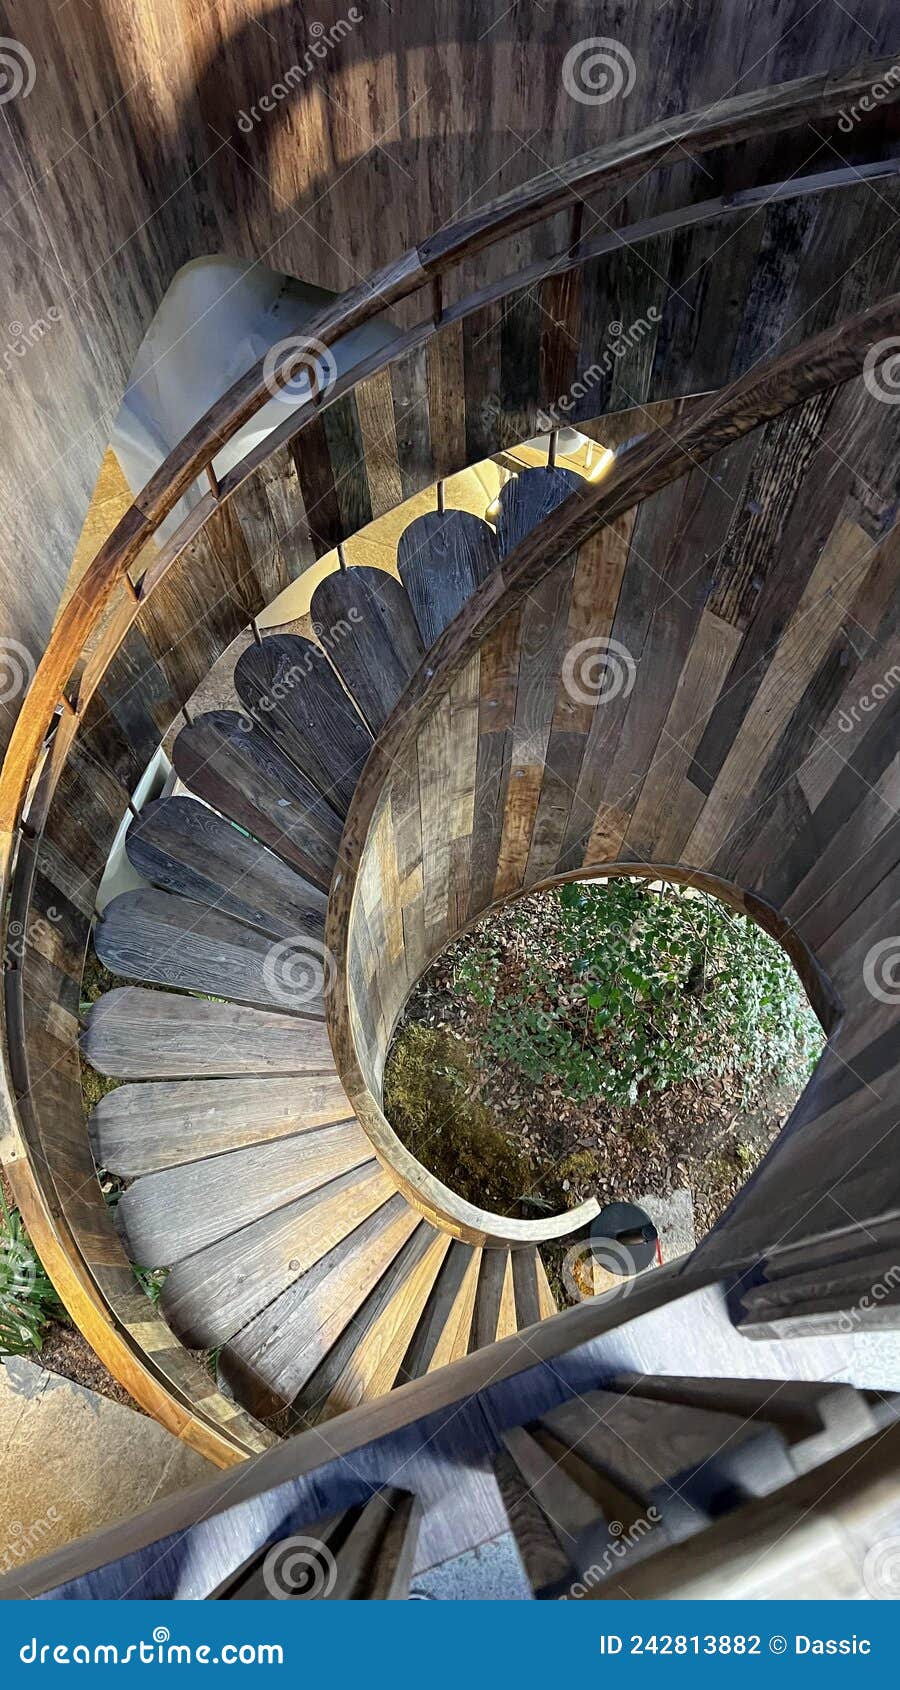 spiral wooden stairs